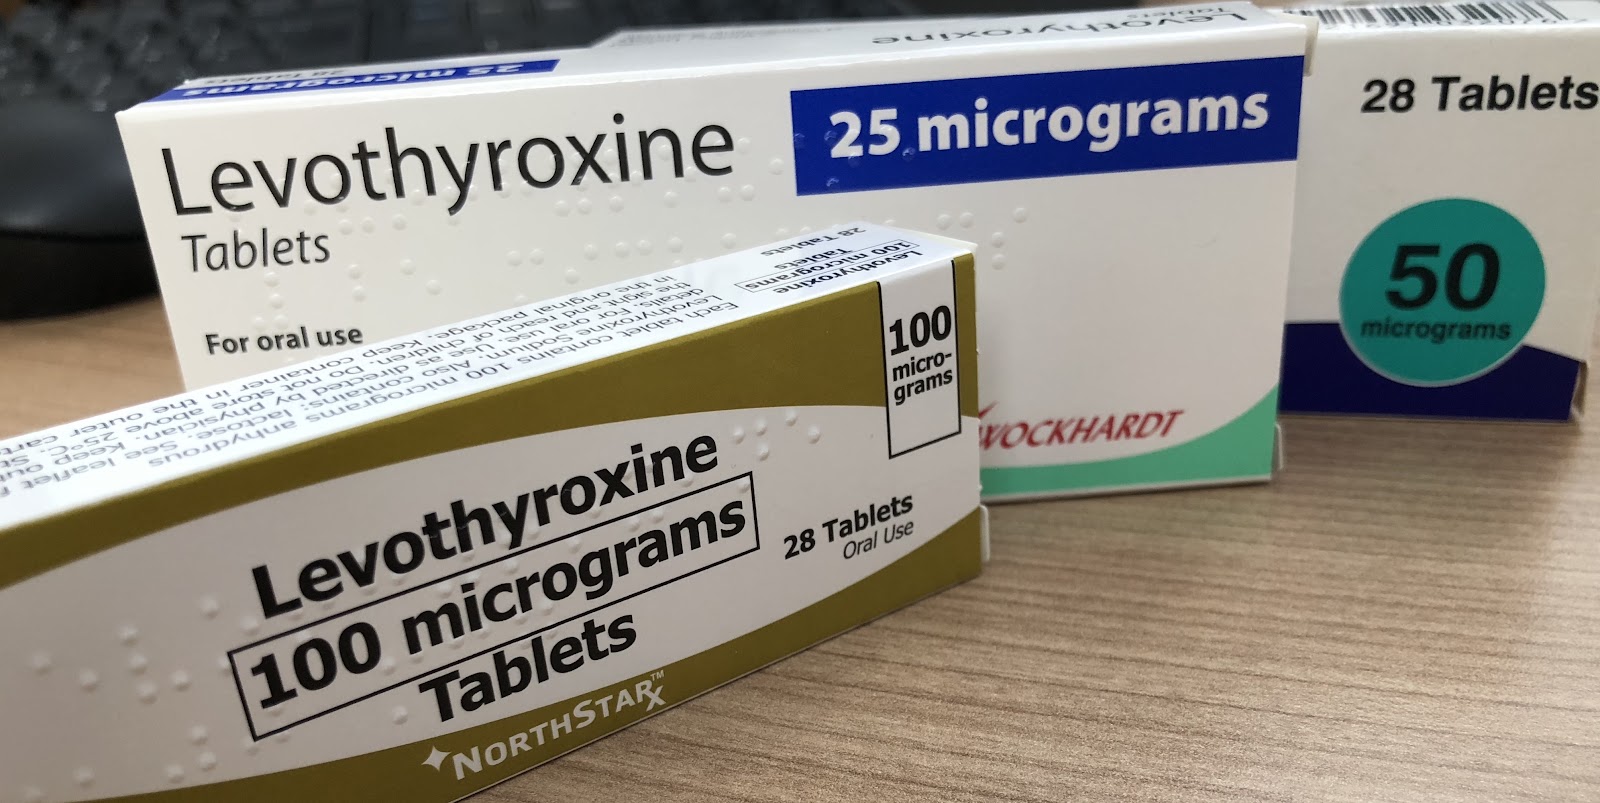 Levothyroxine uses, benefits and side effects Echo Pharmacy